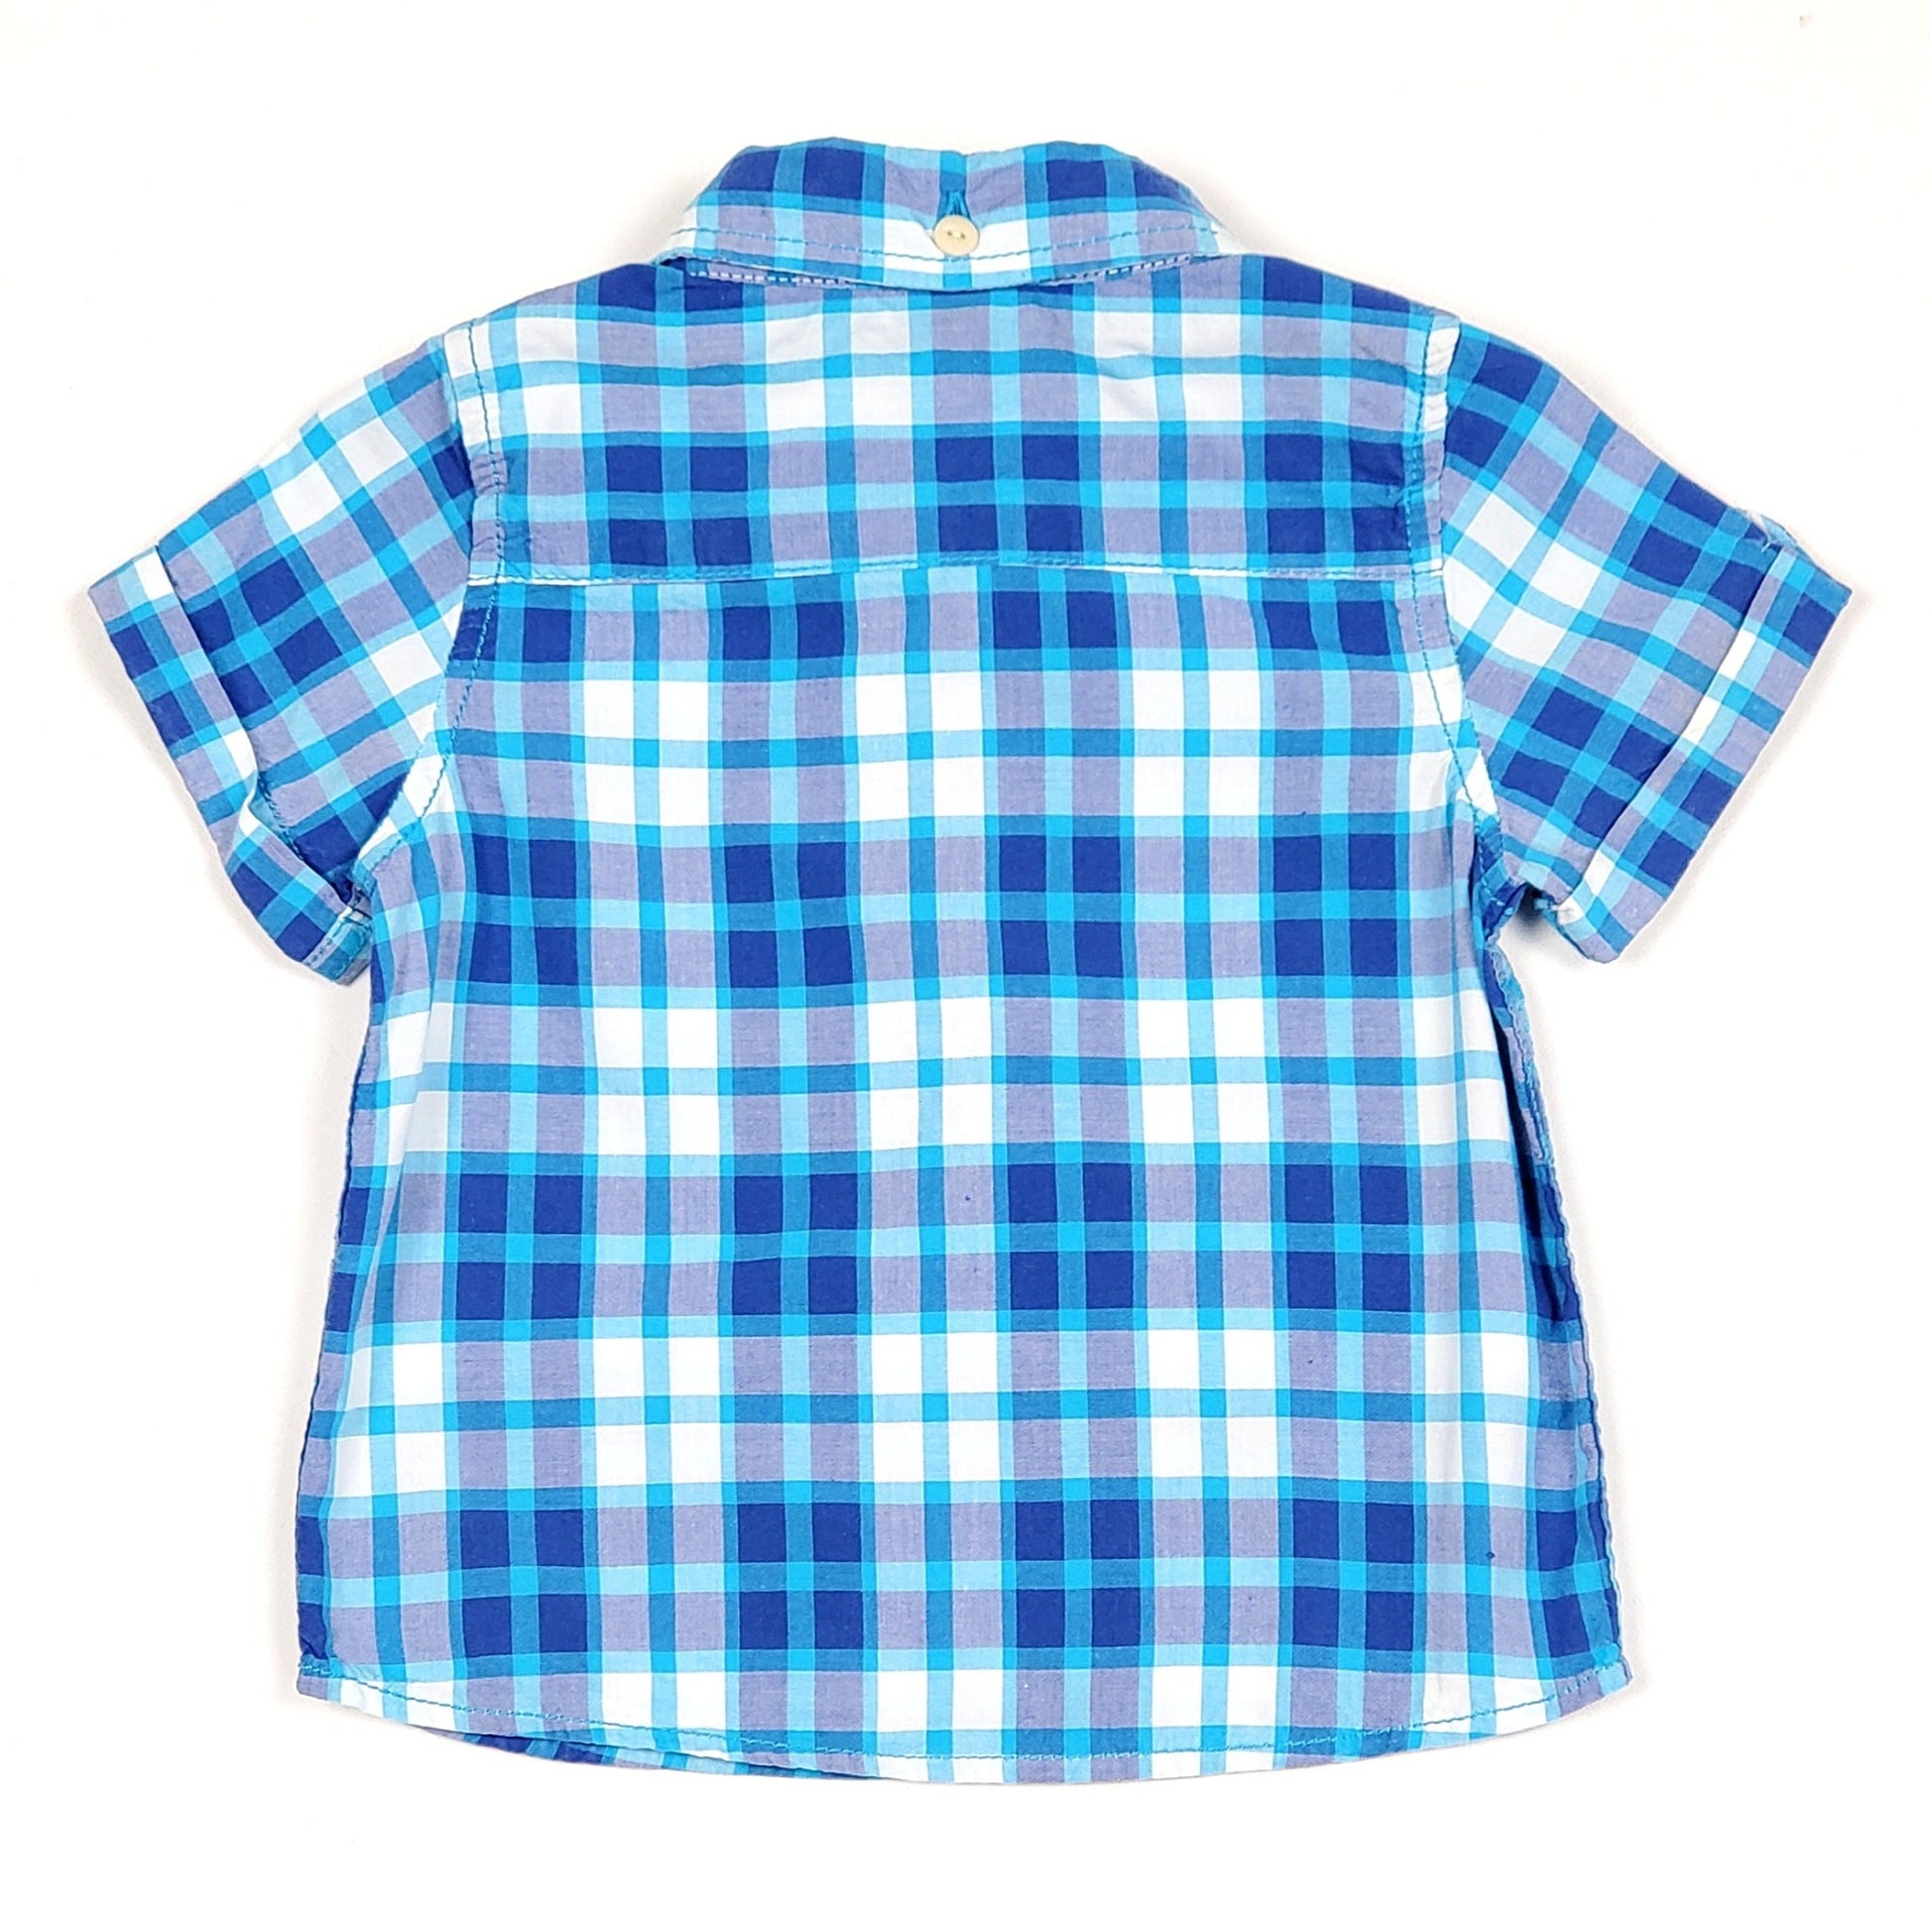 Baby Gap Boys Blue White Plaid Shirt 12M Used, back